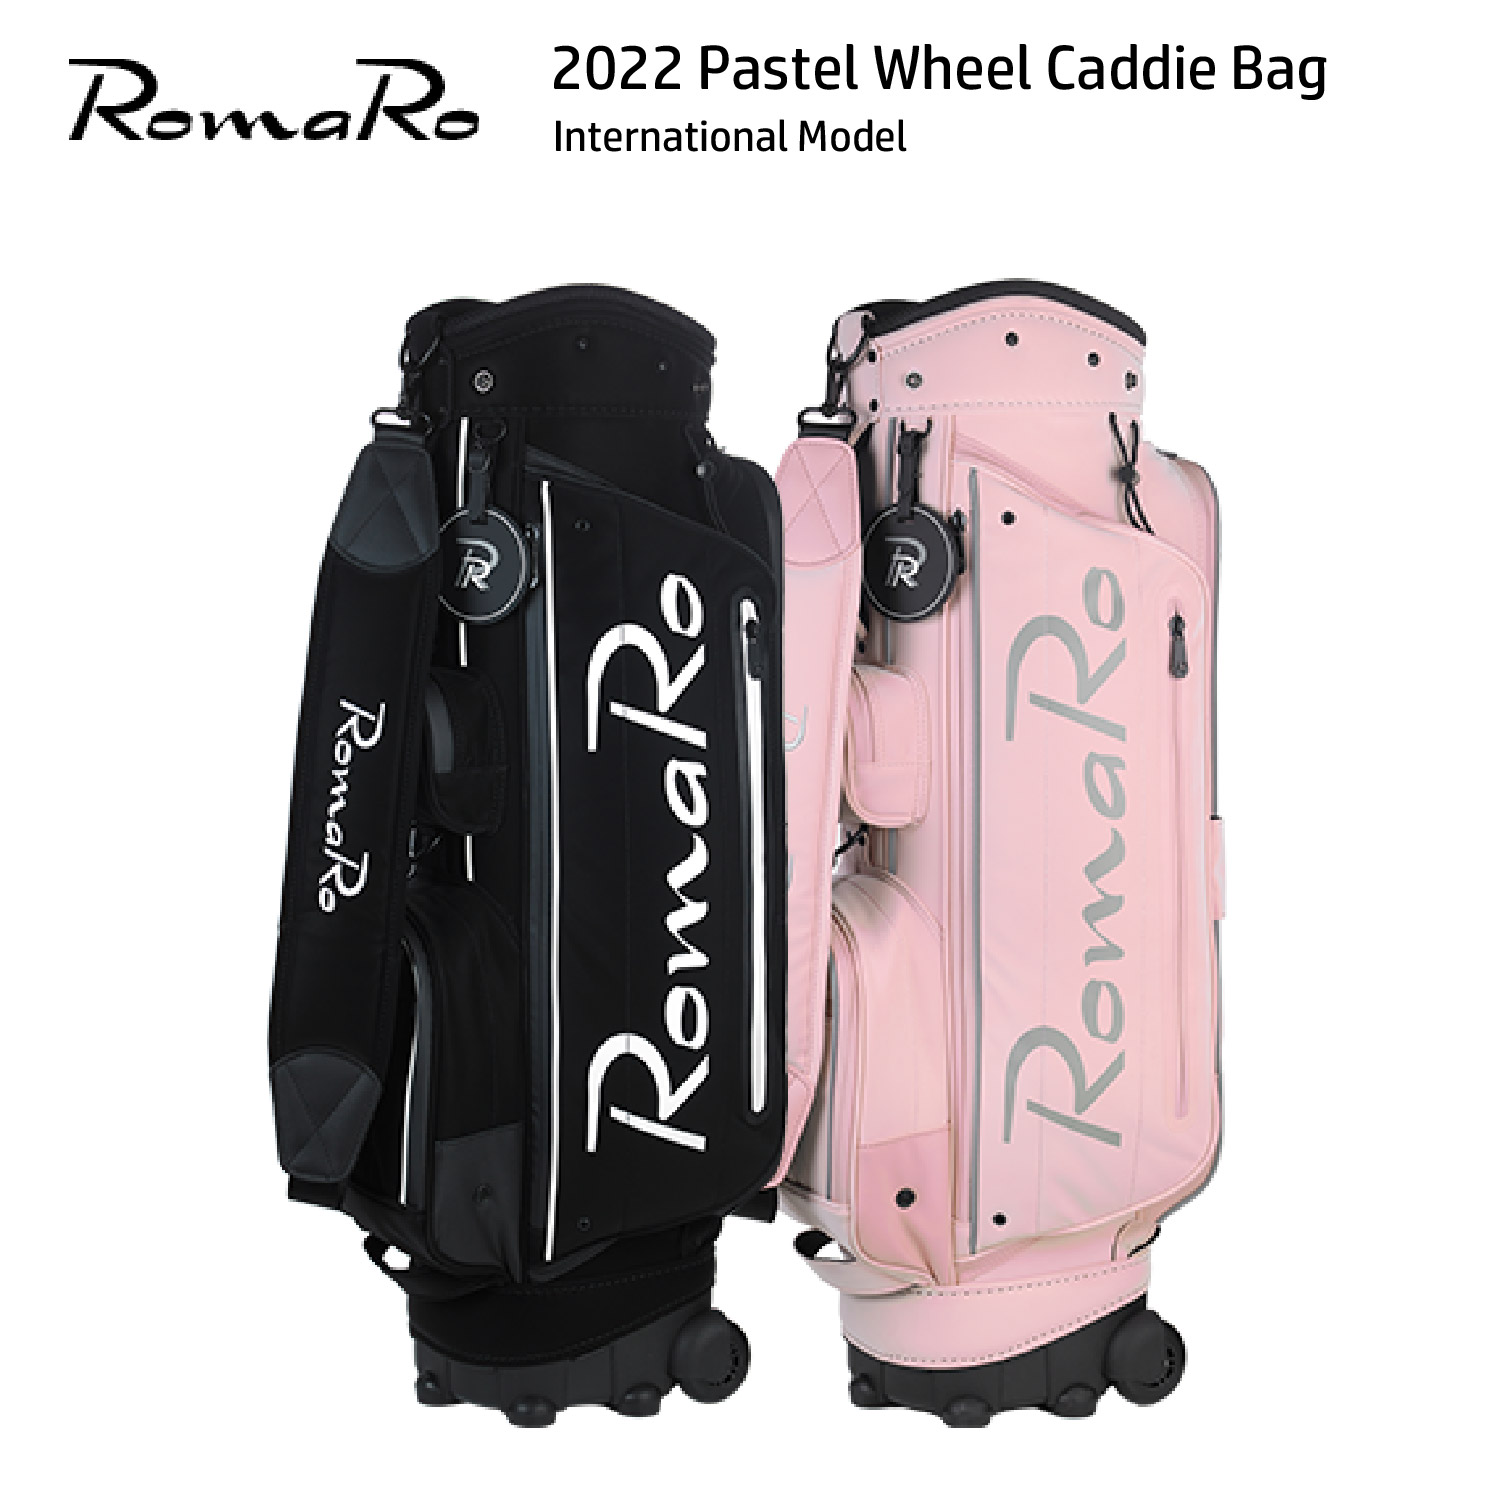 RomaRo 2022 Pastel Wheel Caddie Bag International Model